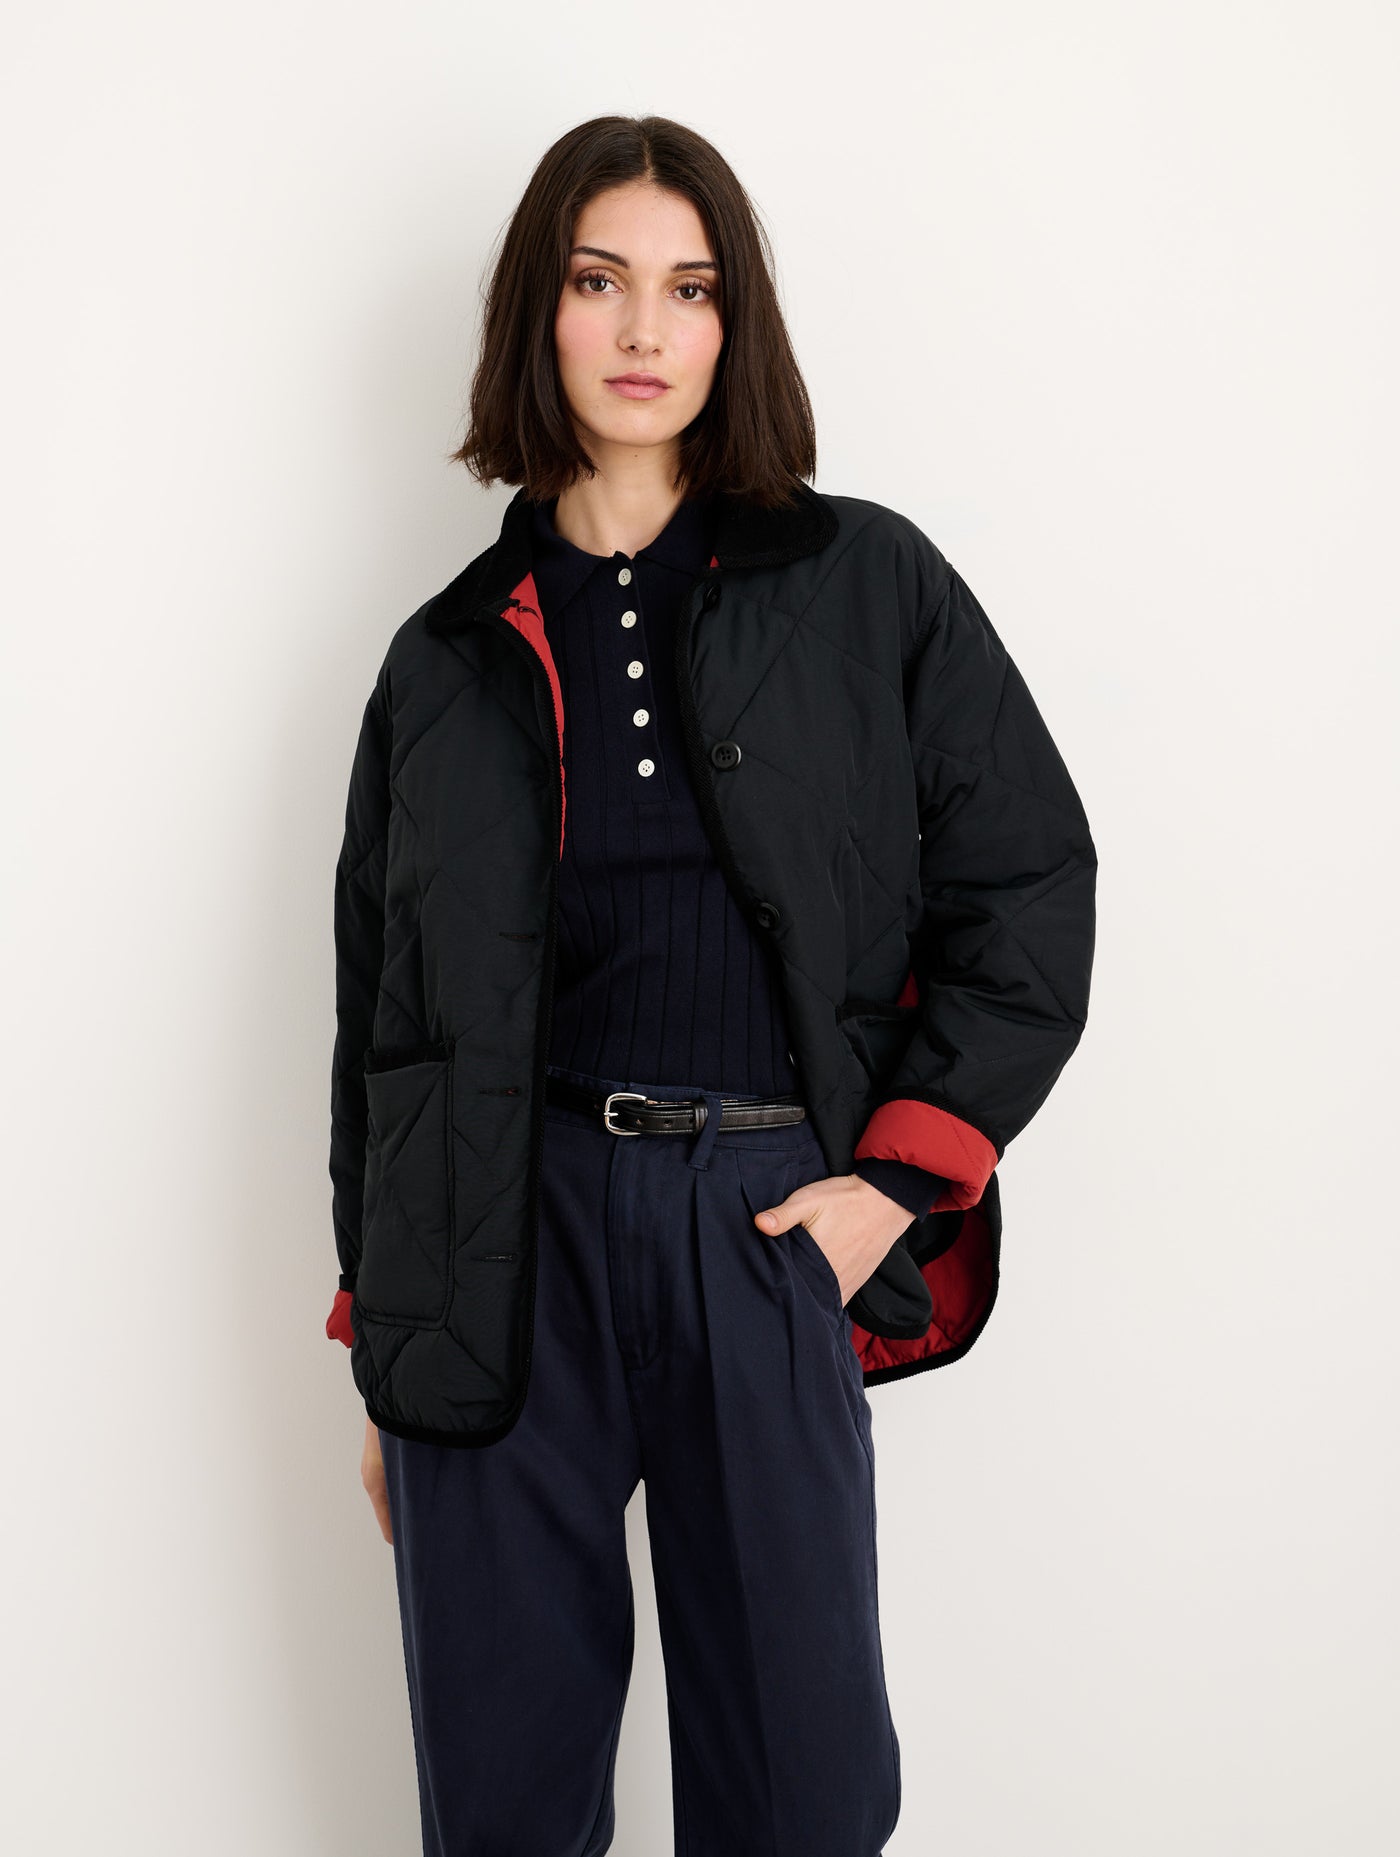 Women's padded jacket in dark blue nylon and black cotton corduroy